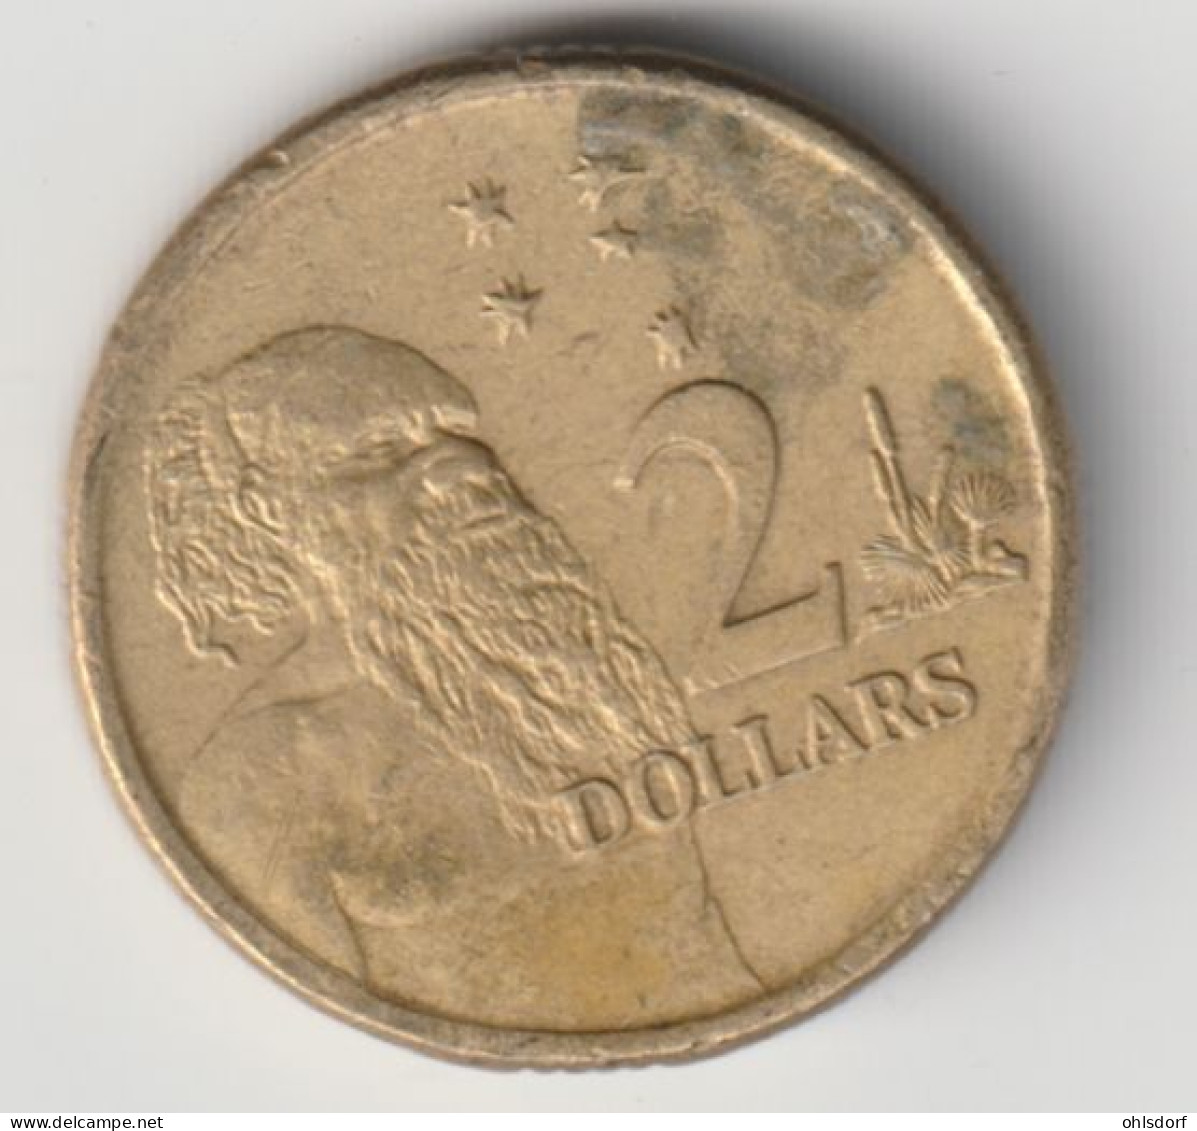 AUSTRALIA 2005: 2 Dollars, KM 406 - 2 Dollars